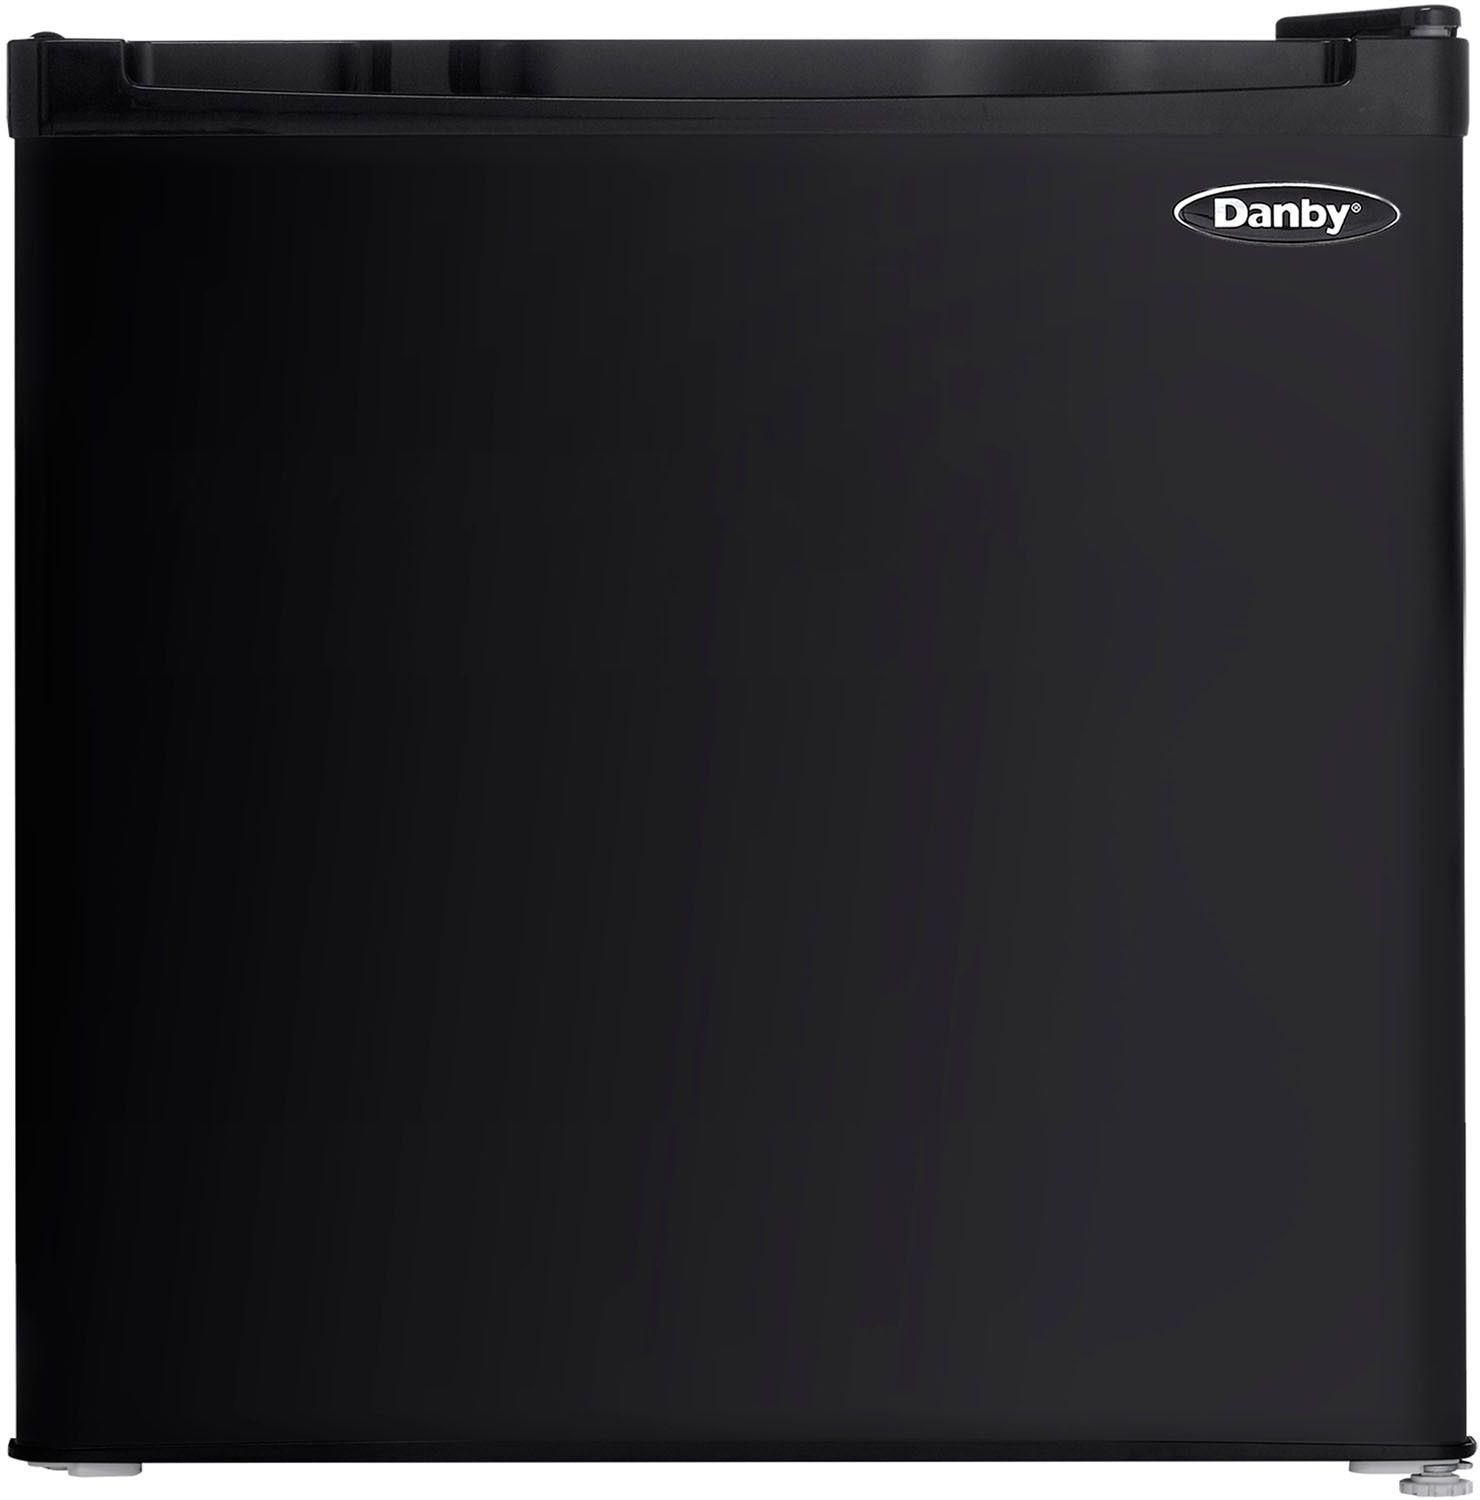 Danby® 1.6 Cu. Ft. Black Compact Refrigerator